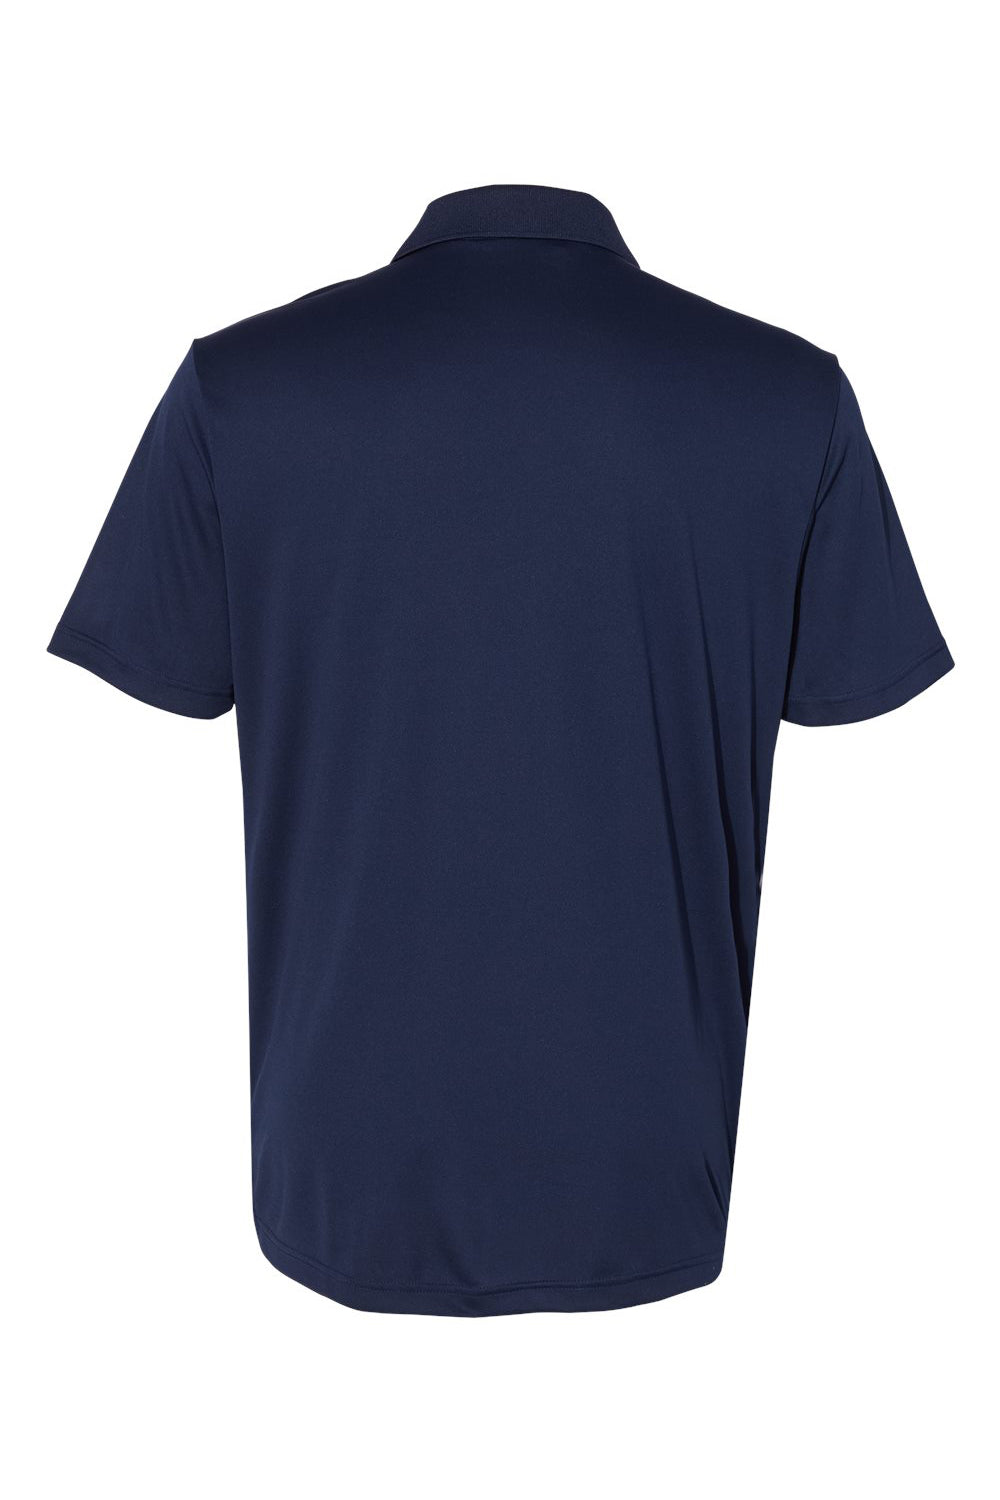 Adidas A230 Mens Performance Short Sleeve Polo Shirt Navy Blue Flat Back